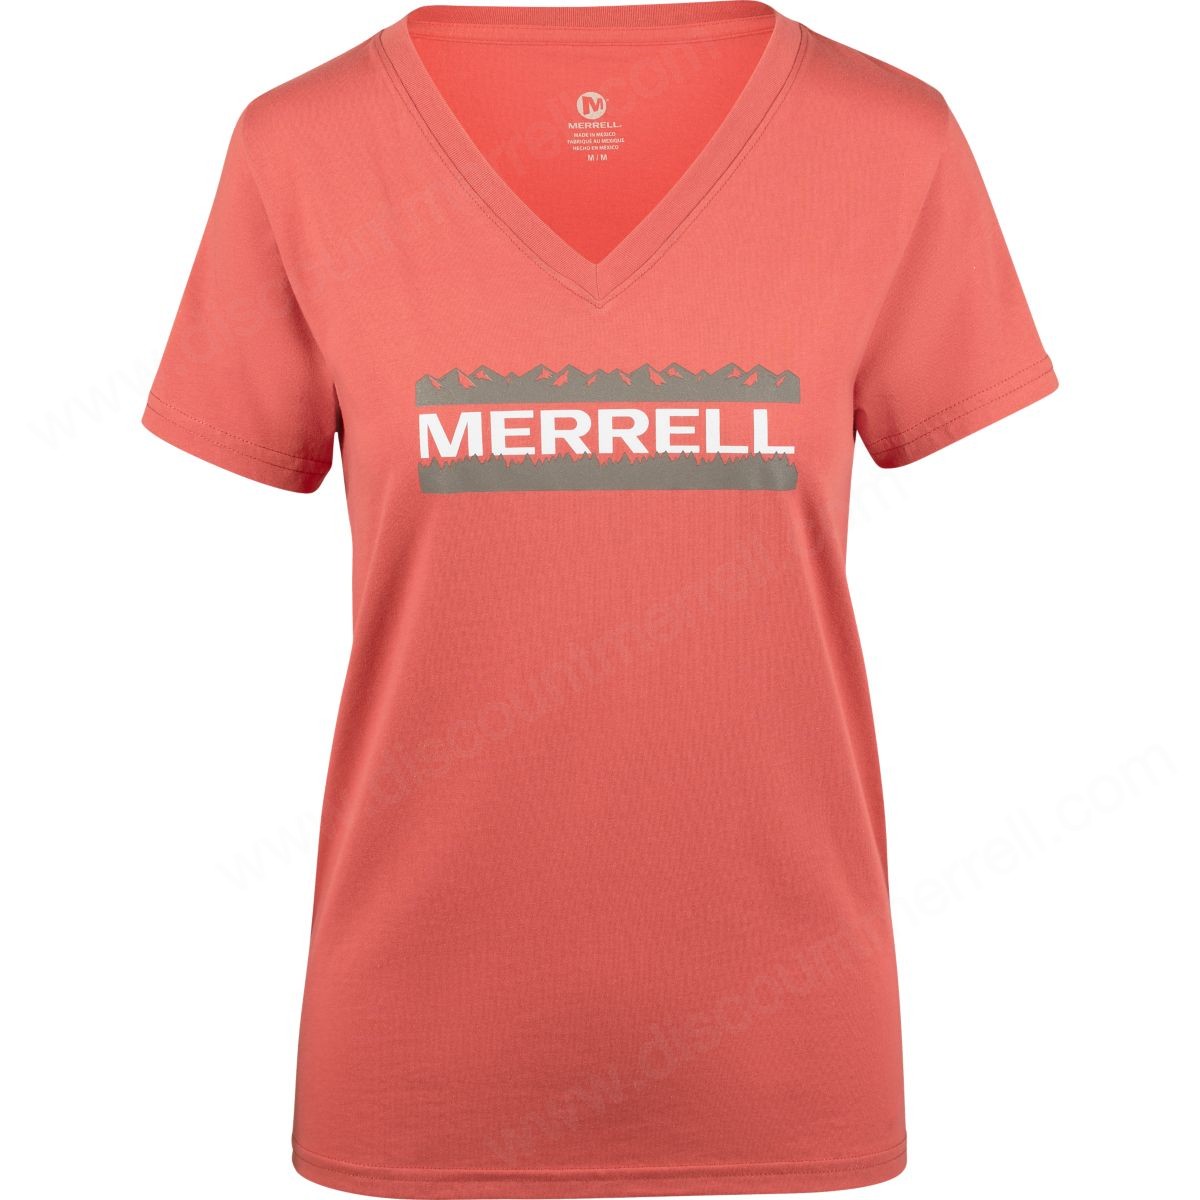 Merrell Womens's Pascal T-Shirts Apricot Brandy/boulder/white - -0